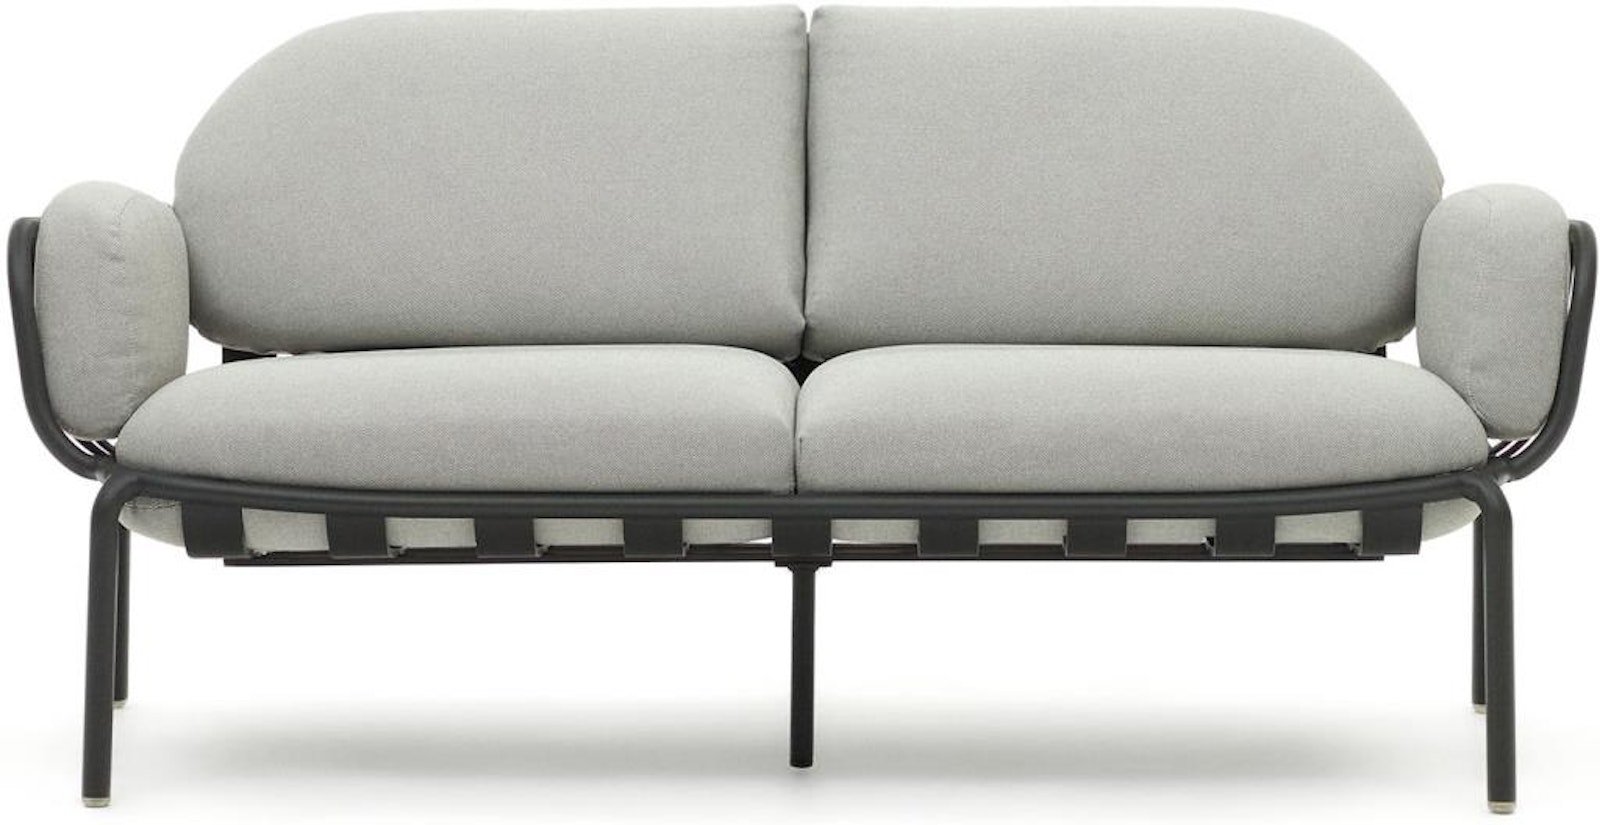 Joncols, Udendørs 2-personers sofa, moderne, nordisk, metal by Laforma (H: 72 cm. x B: 164 cm. x L: 80 cm., Grå)